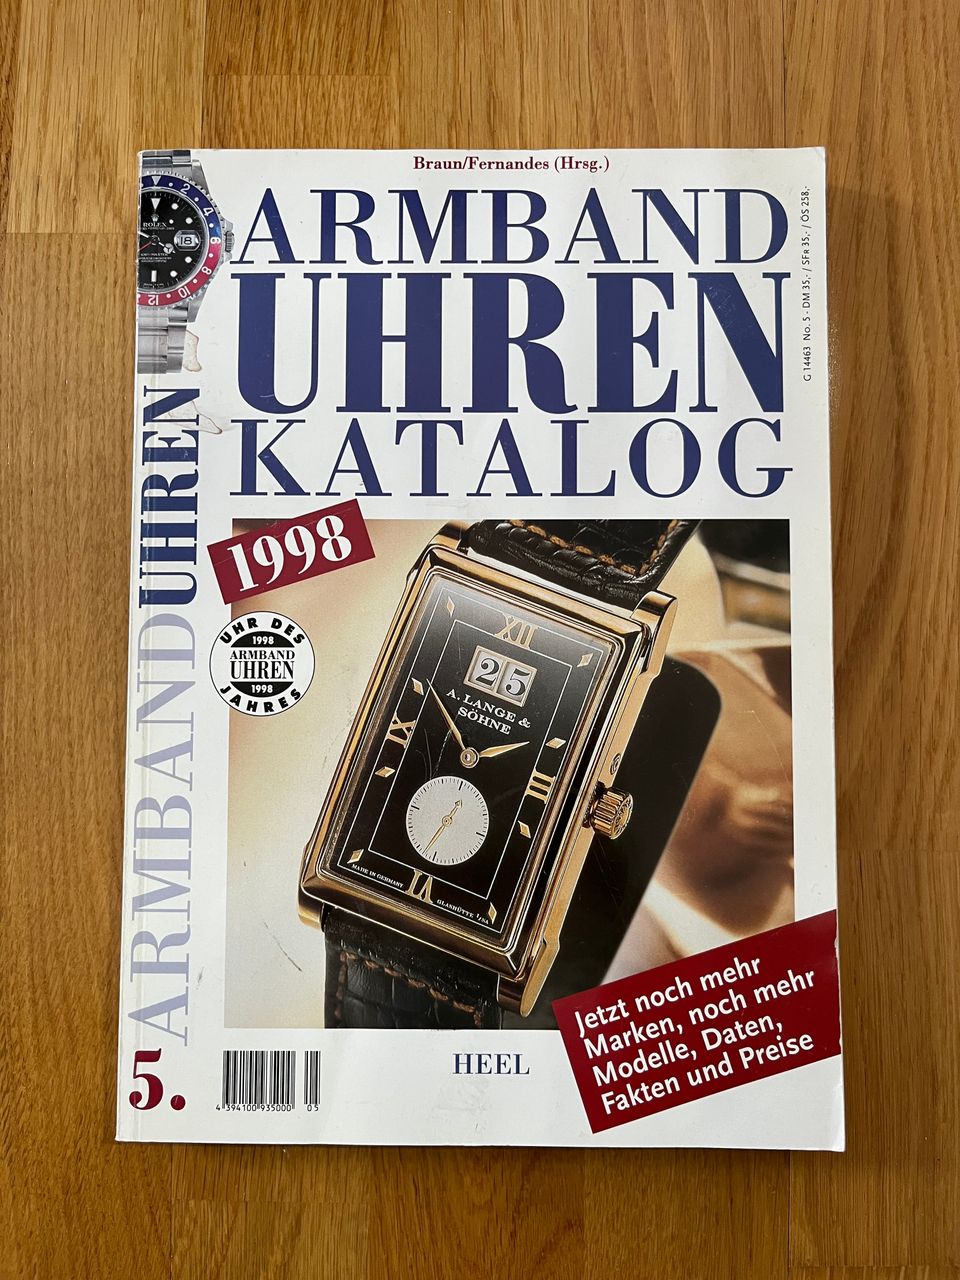 Kelloluettelo Armbanduhren Katalog (Wristwatch catalogue) 1998. Saksankielinen.